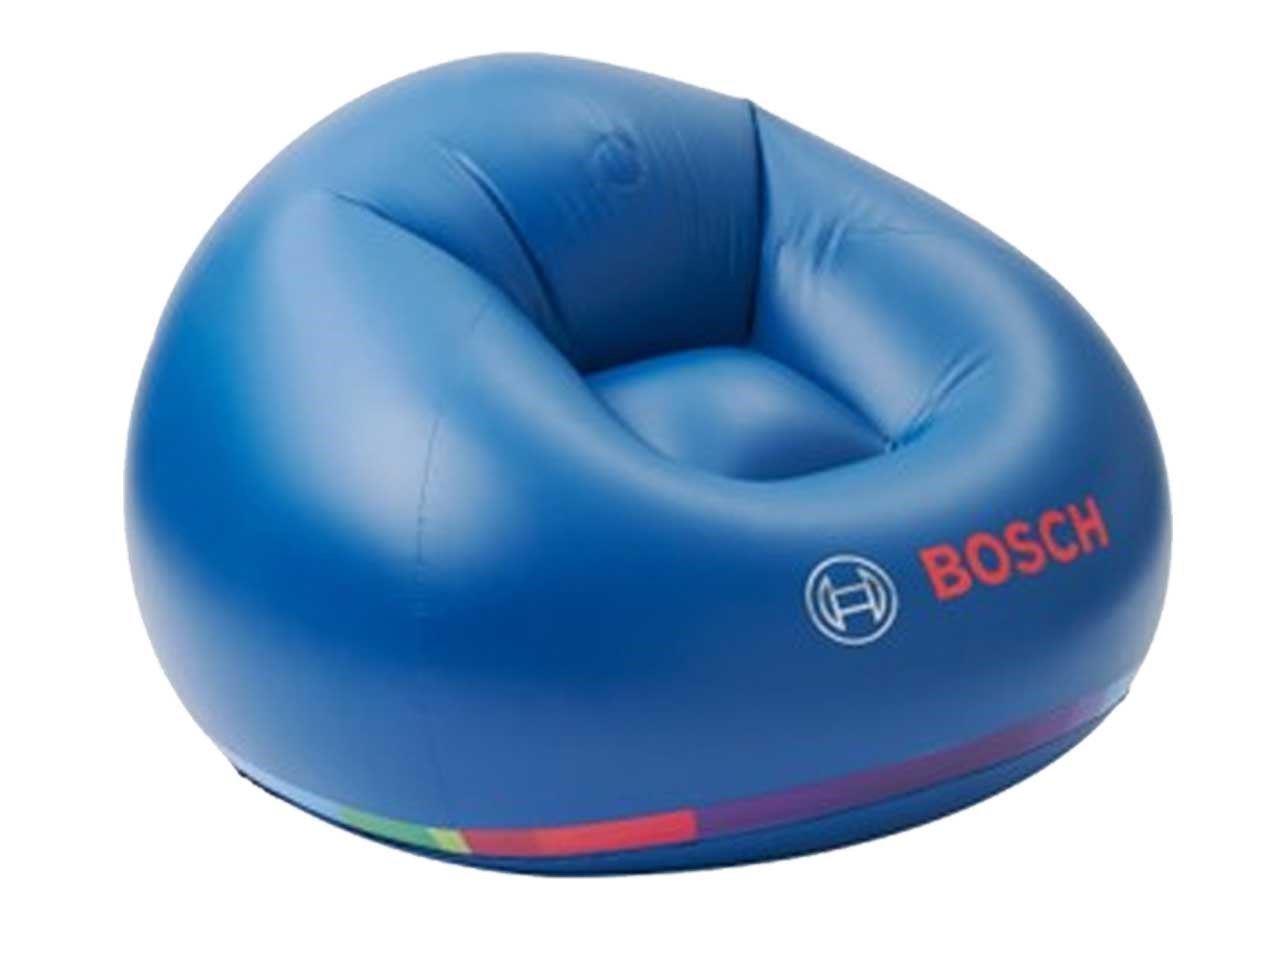 Bosch 2607017597 set bitova i nasadnih ključeva Impact Control, 36 delova + stolica na naduvavanje (2607017597)